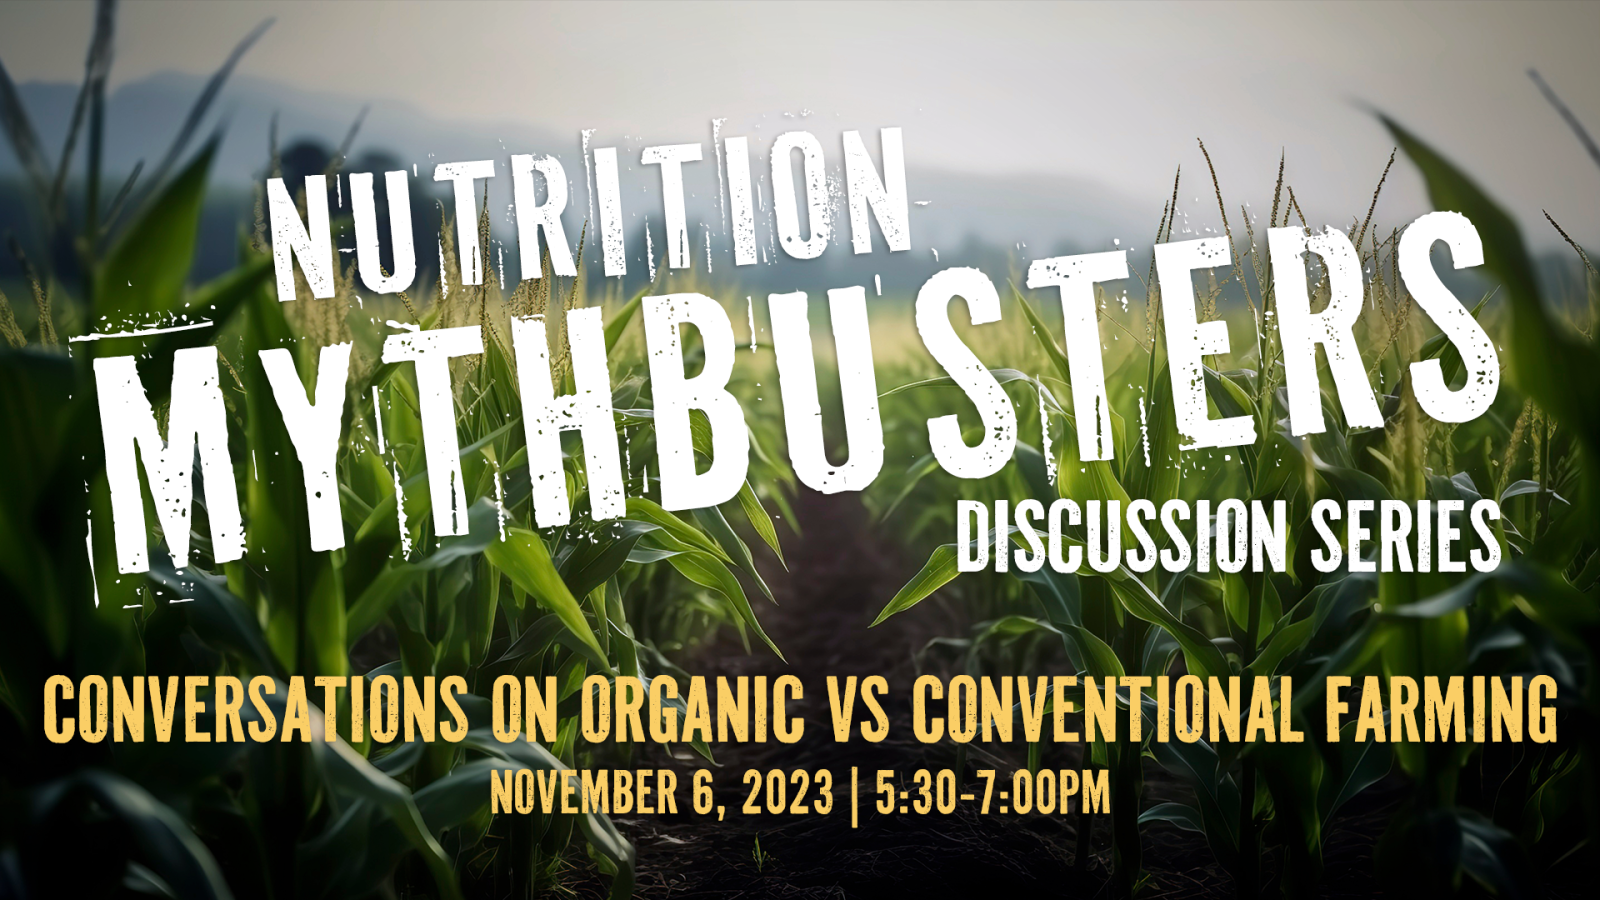 Conversations on Conventional vs Organic Farming